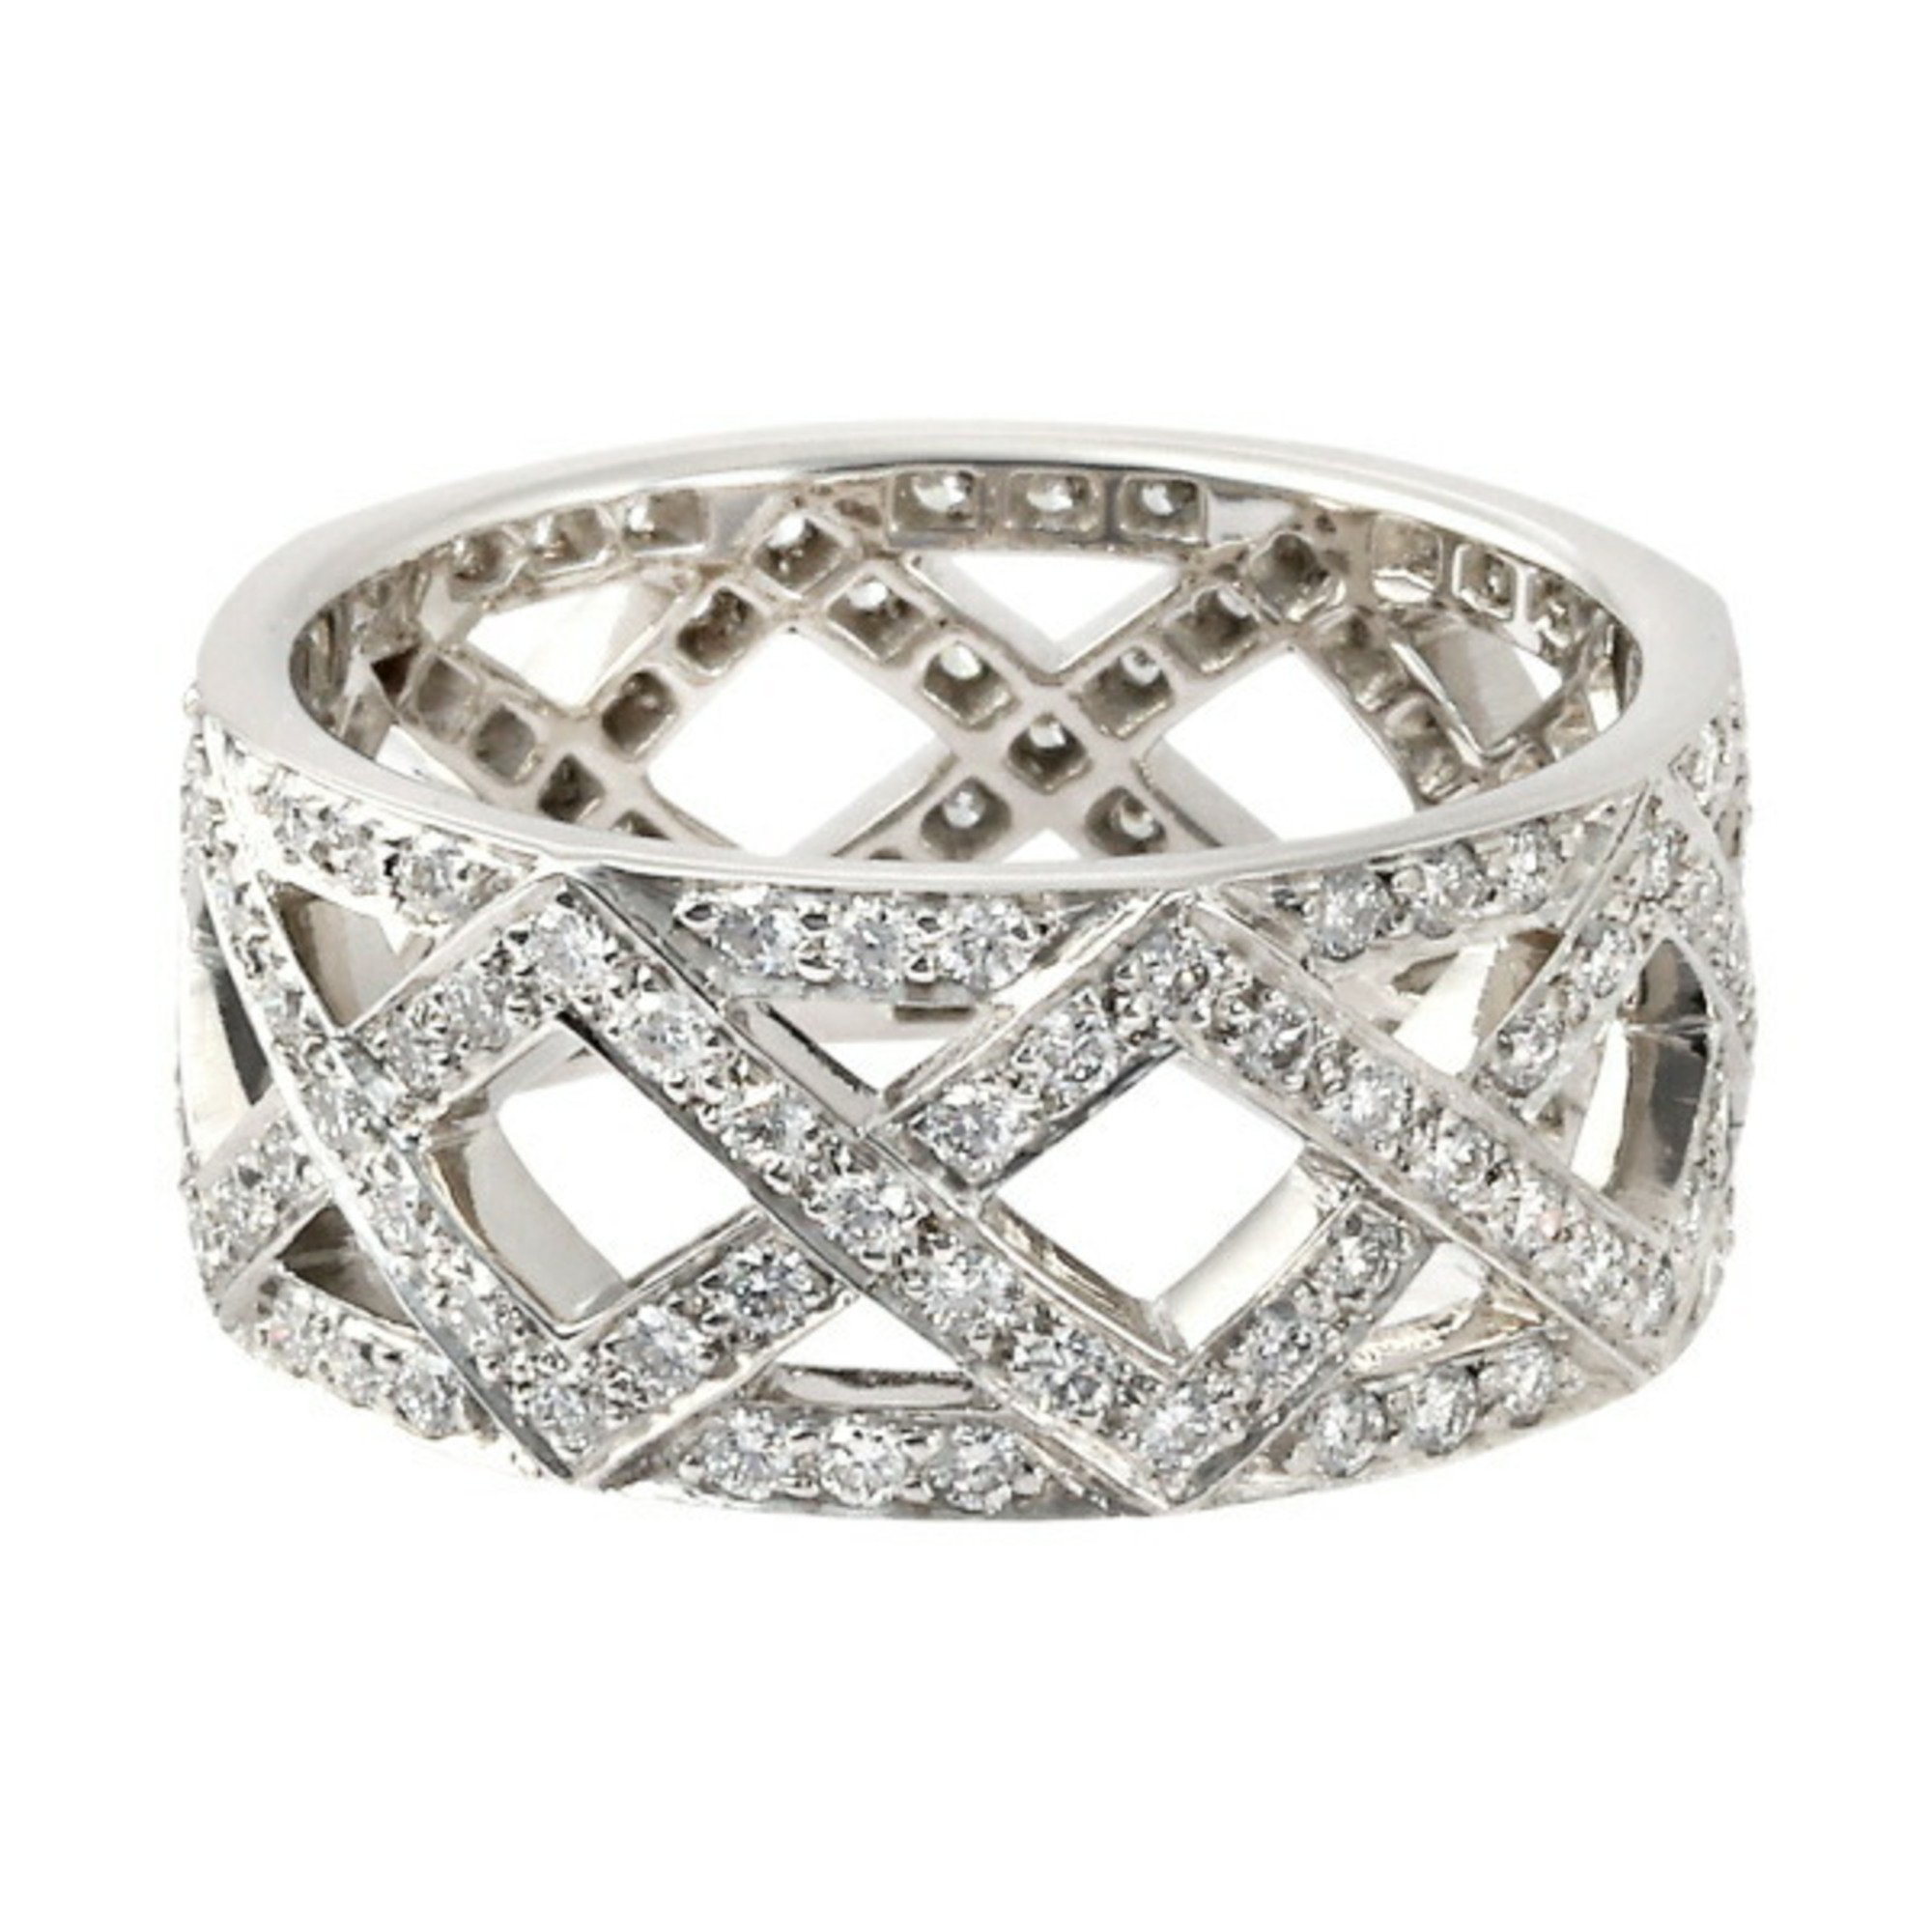 Tiffany PT950 ring